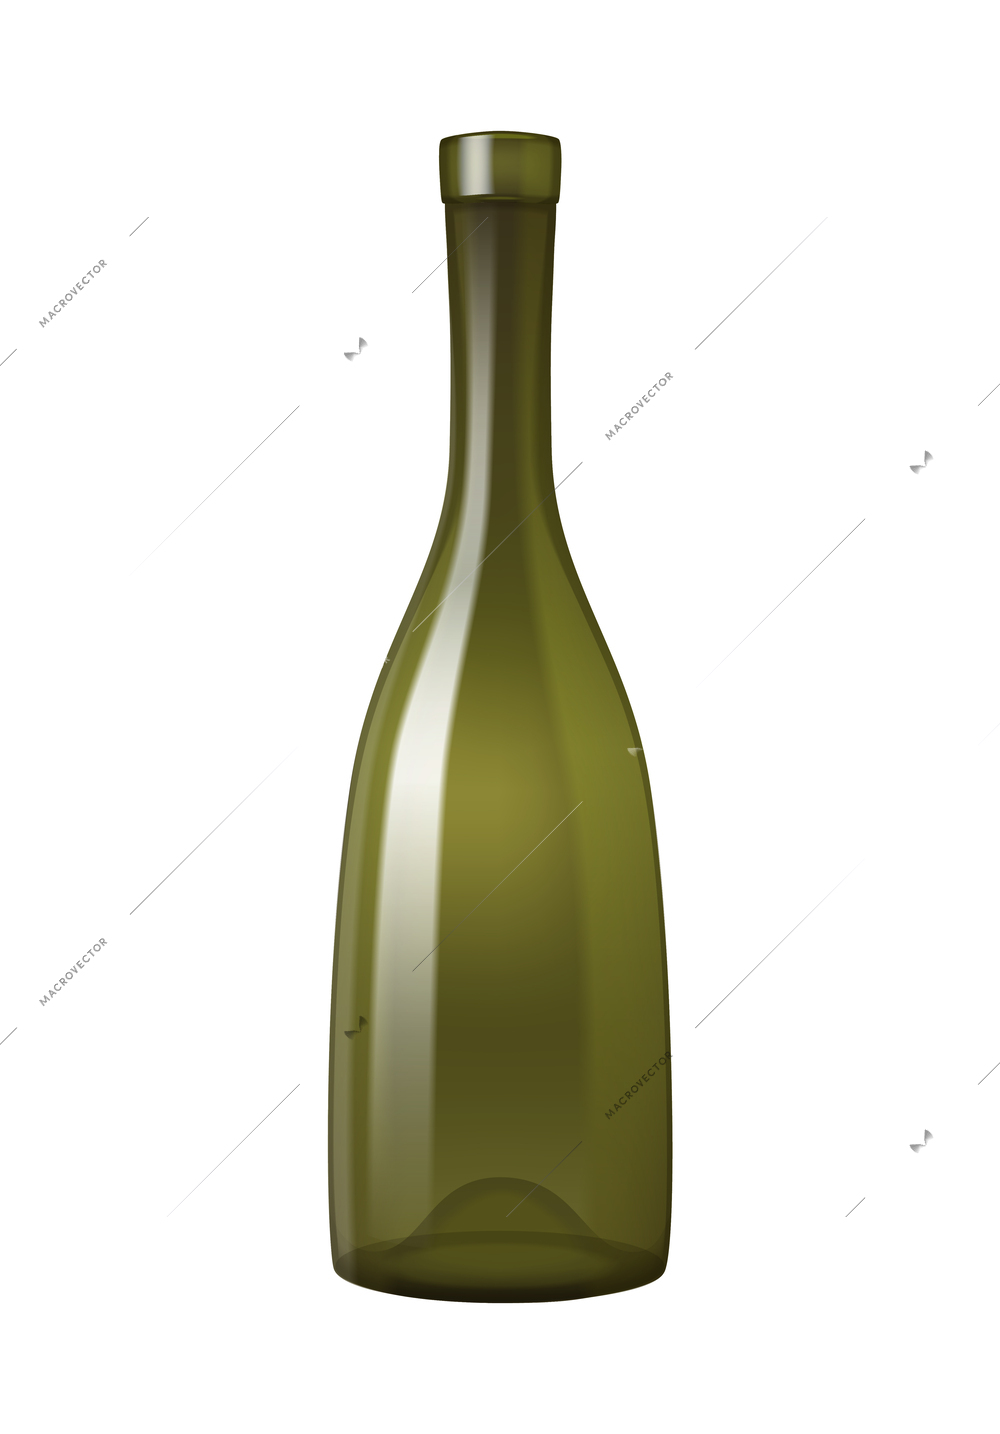 Realistic empty green glass wine bottle vector illustration